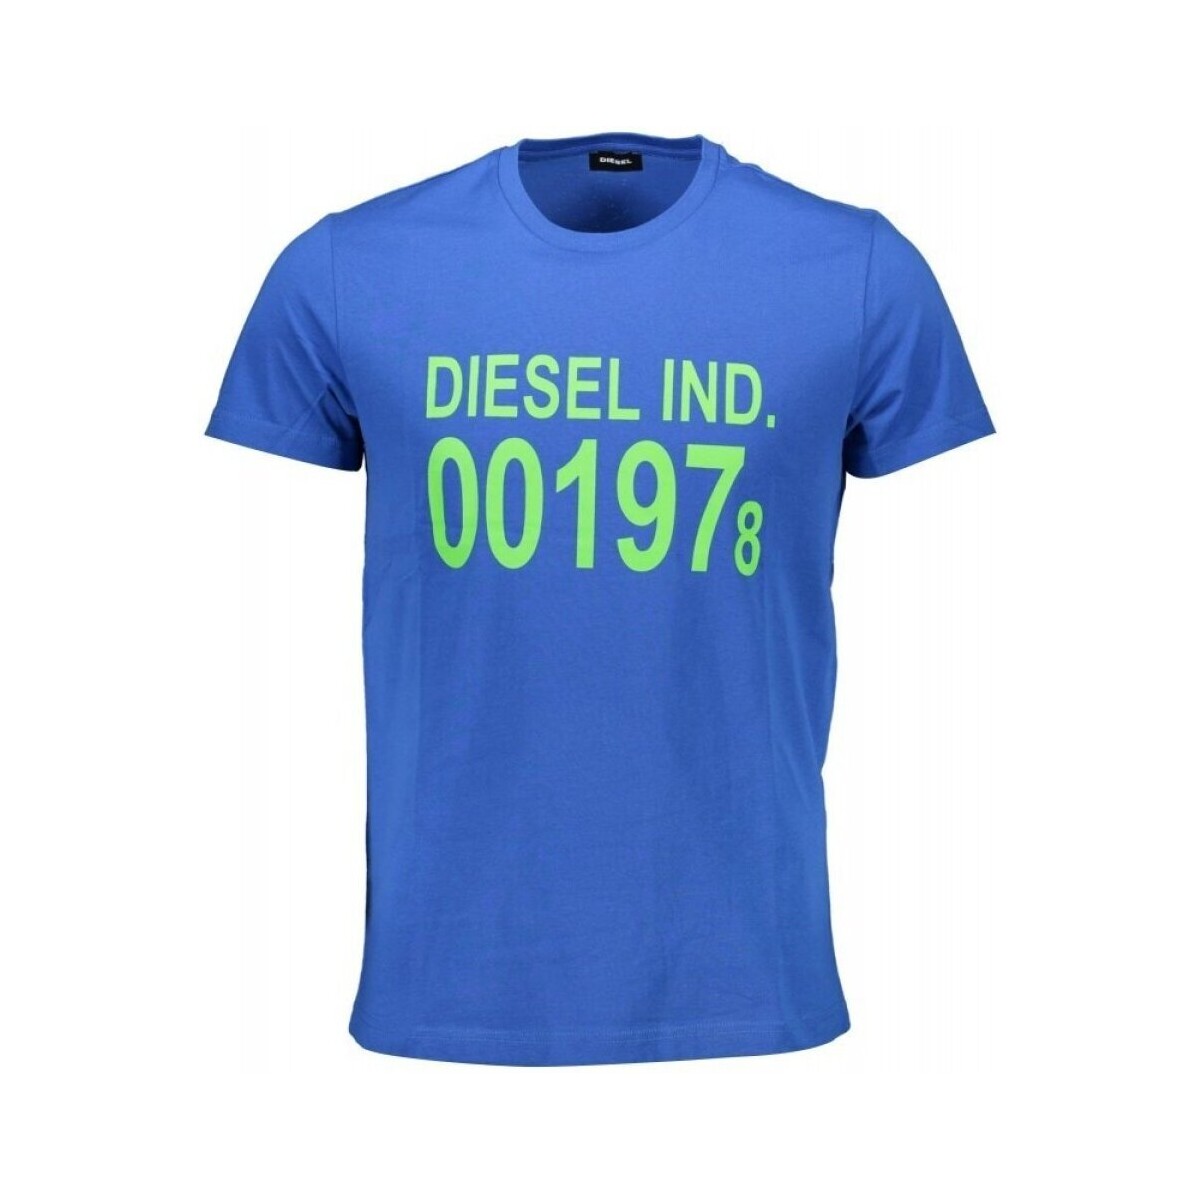 textil Hombre Camisetas manga corta Diesel SASA-T-DIEGO - Hombres Azul